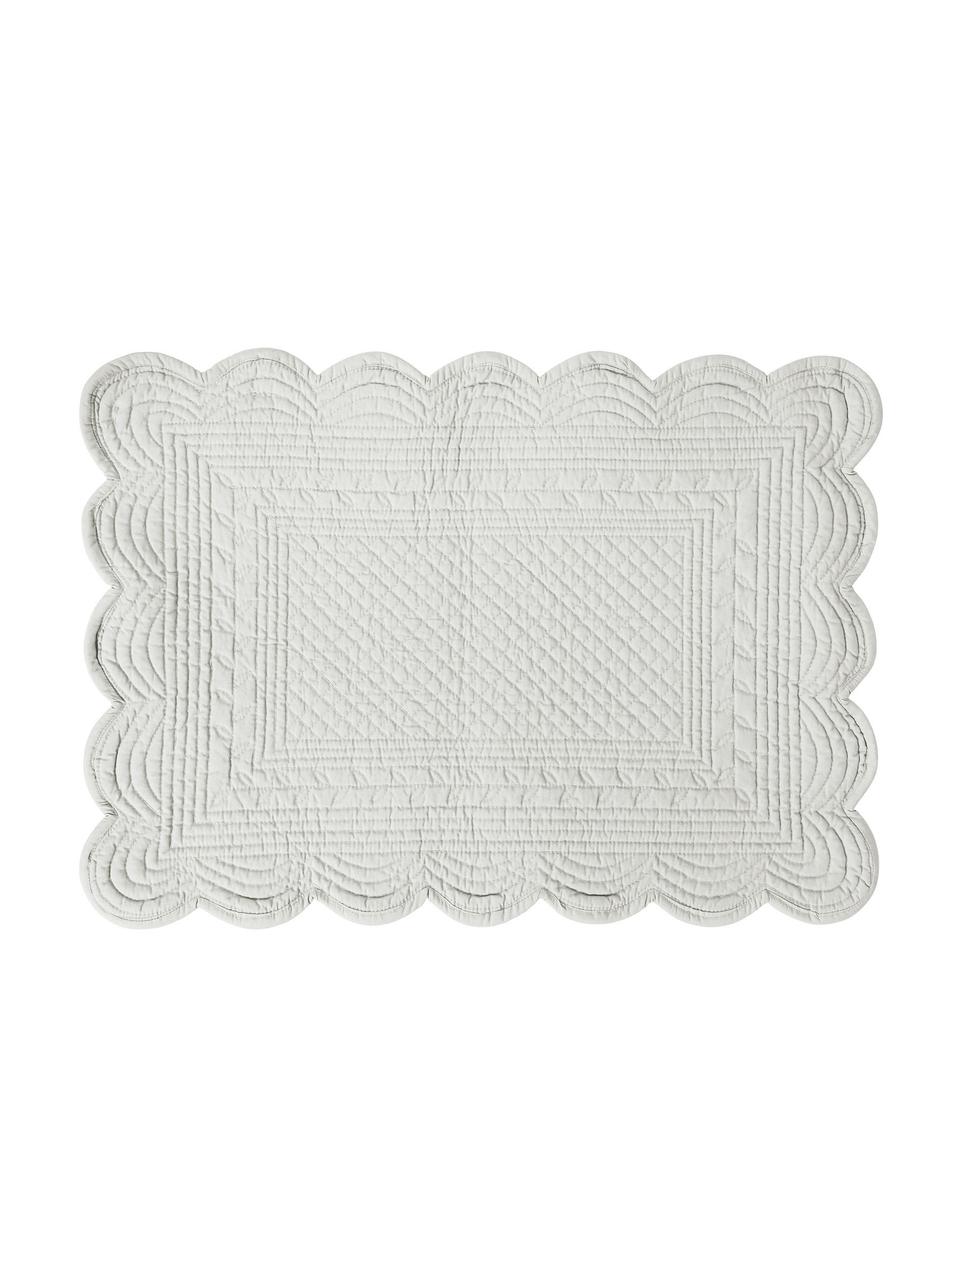 Podkładka z bawełny Boutis, 2 szt., 100% bawełna, Jasny szary, S 49 x D 34 cm